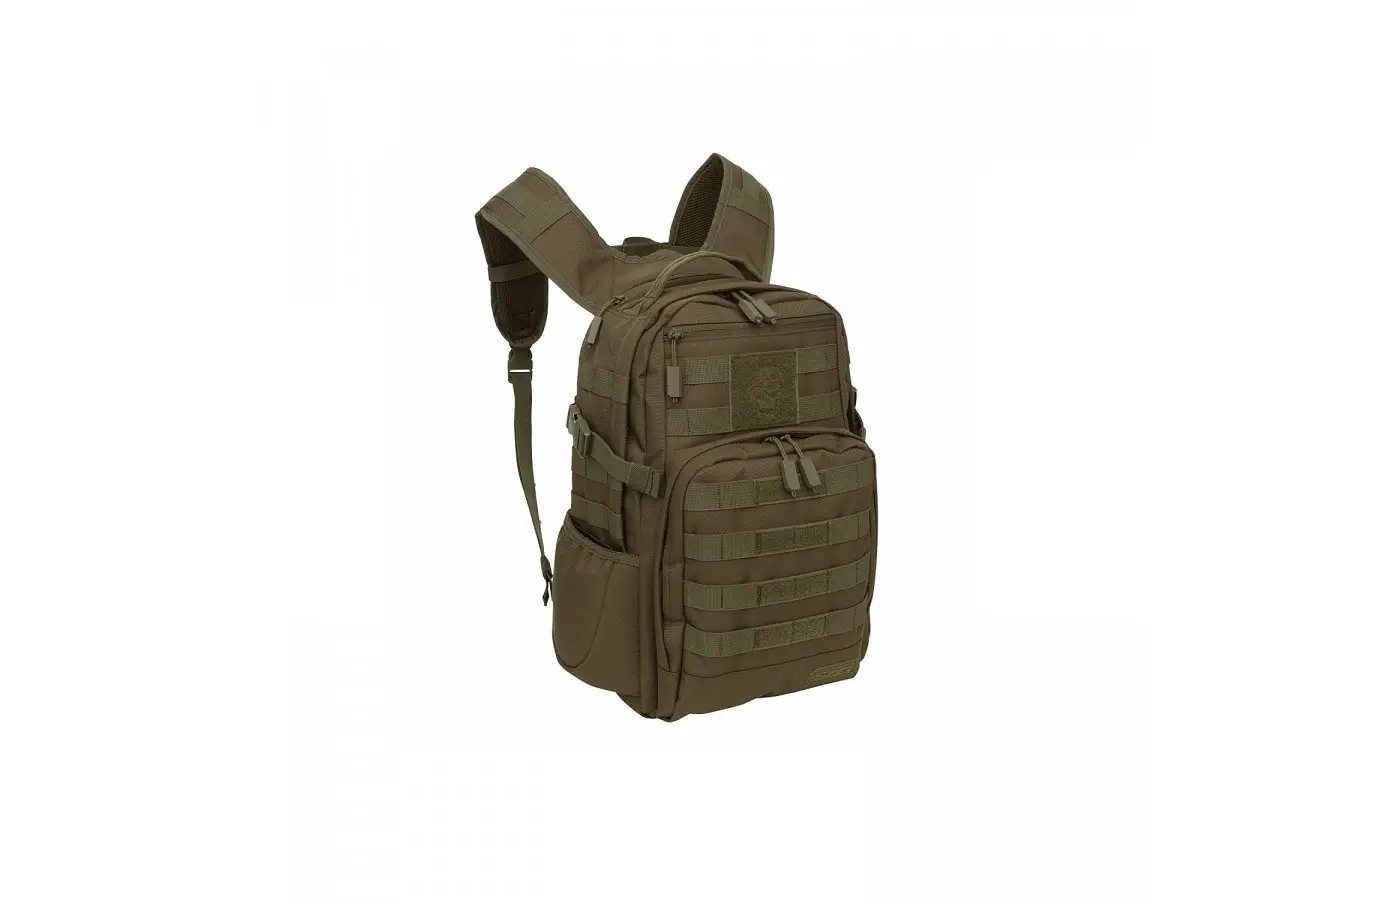 The Sog Ninja Daypack offers a padded back panel and shoulder straps for comfort.